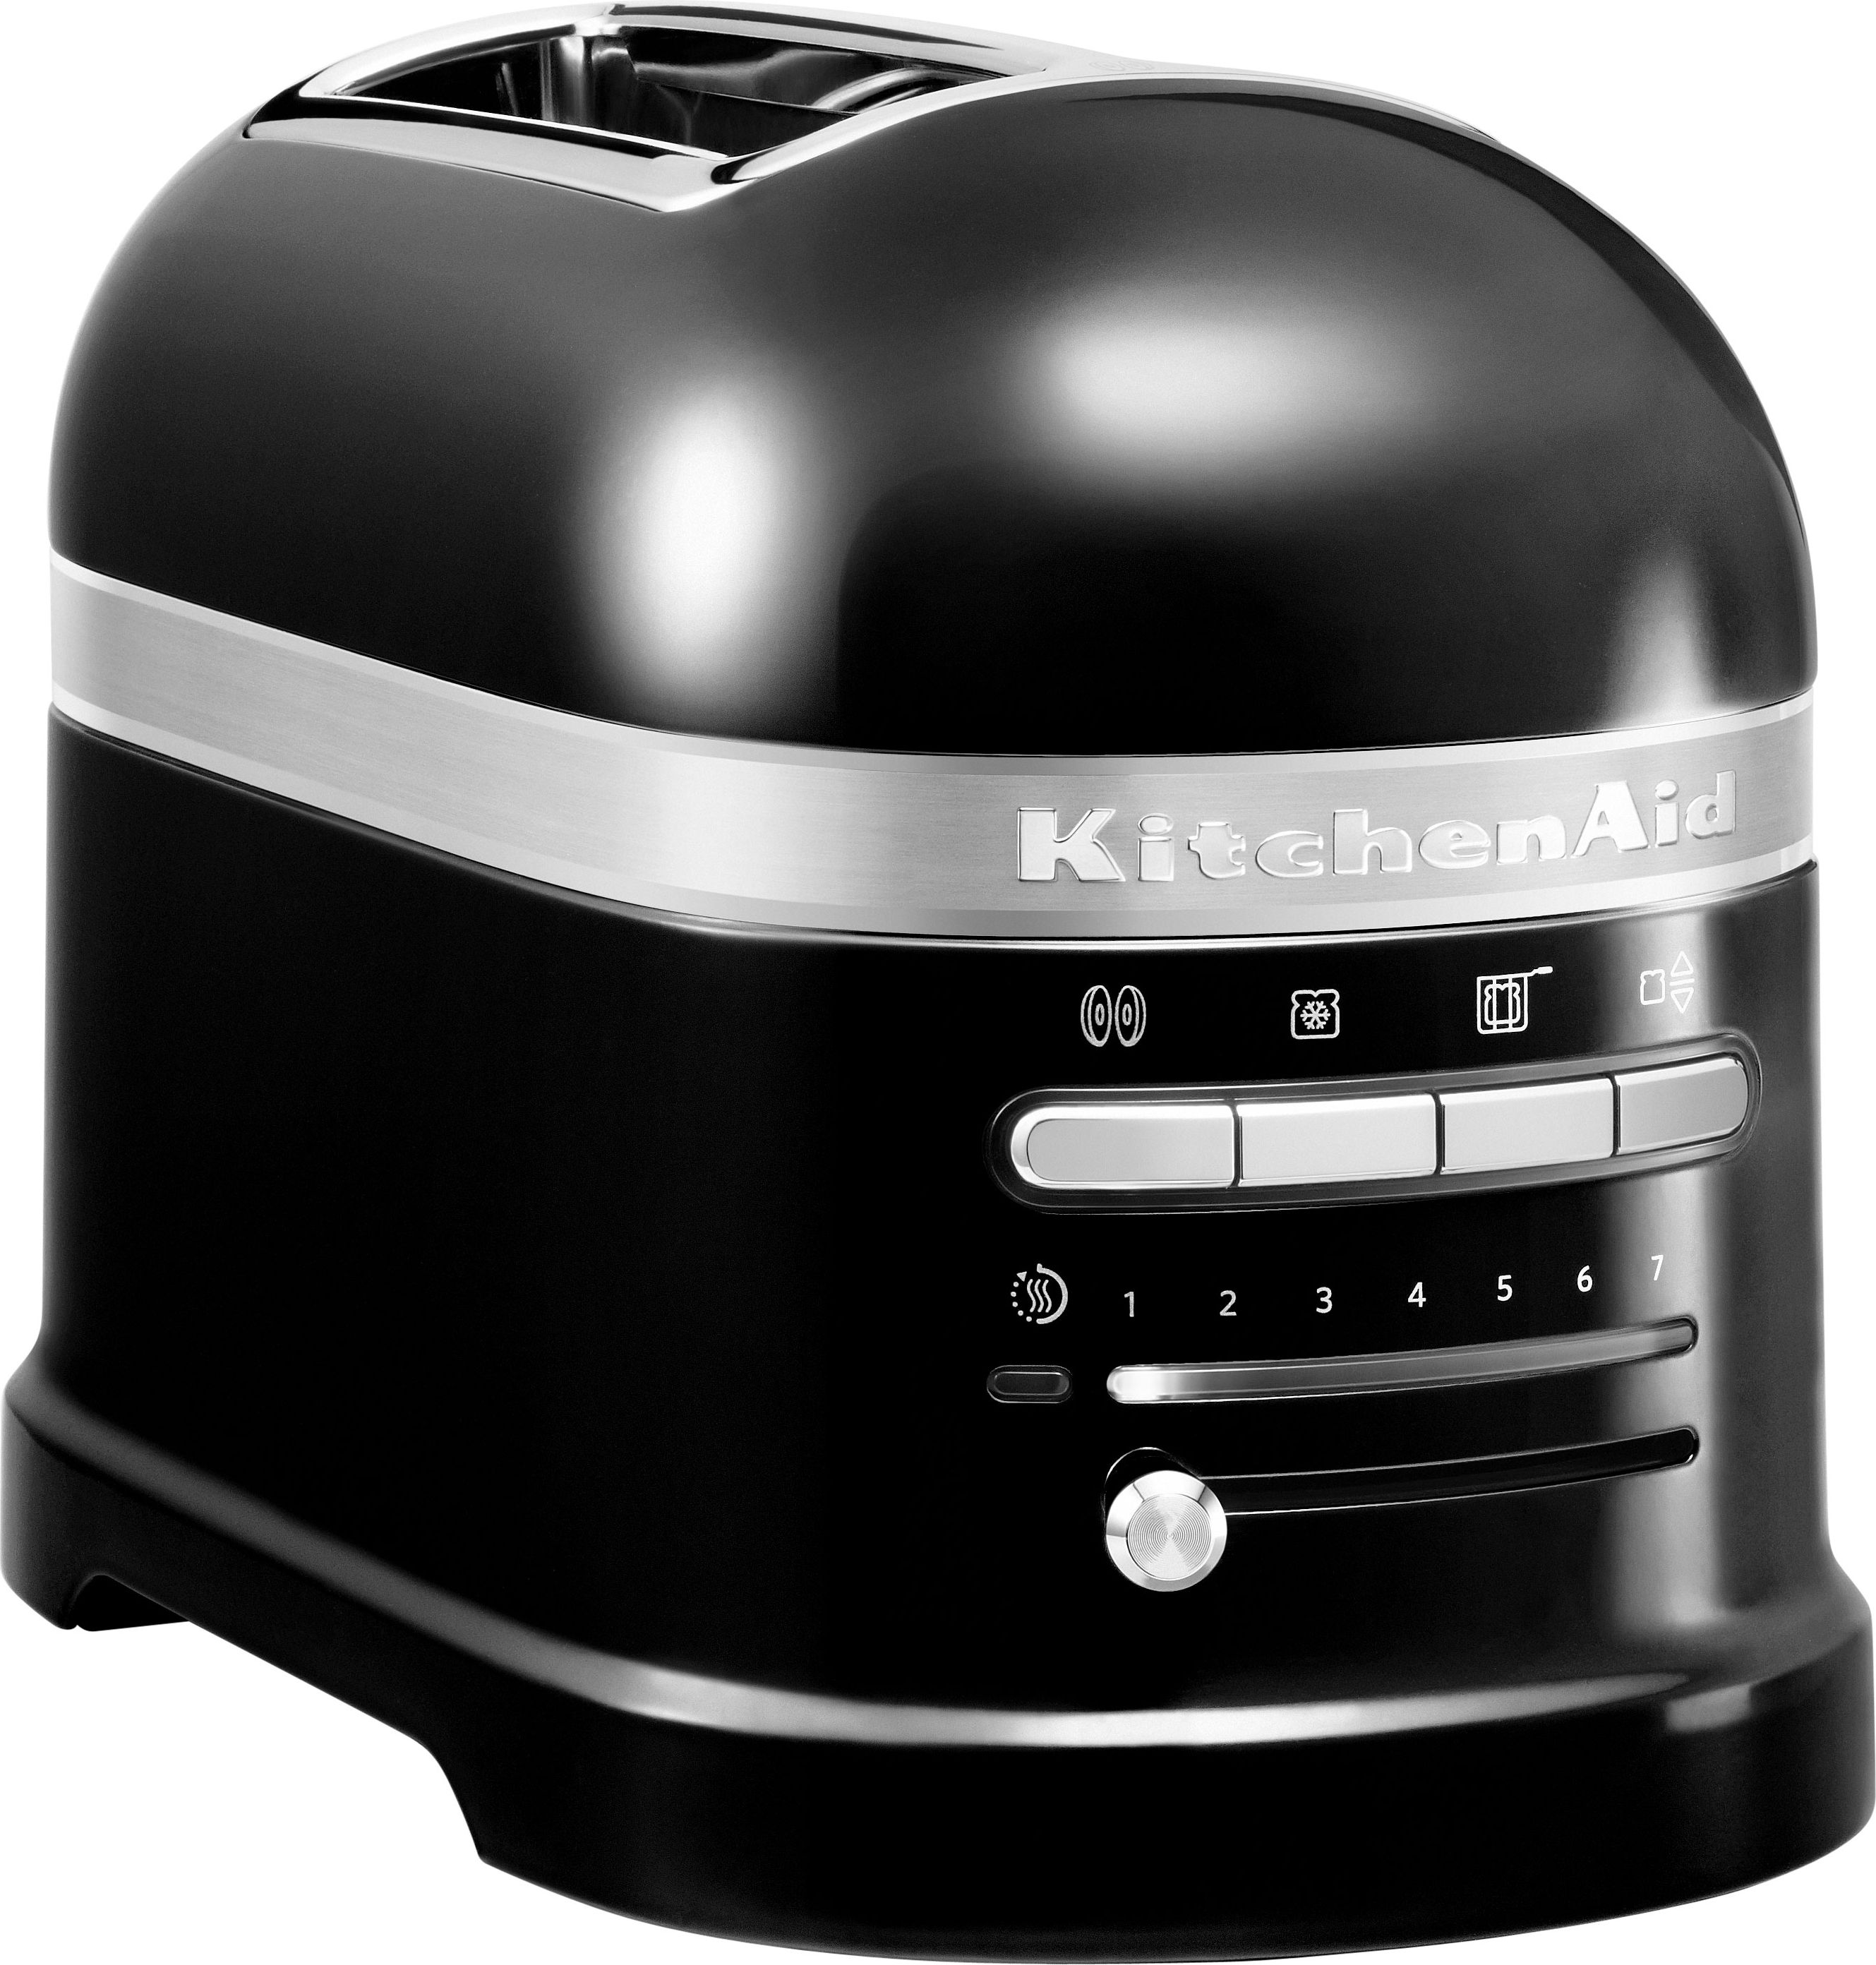 KitchenAid 5KMT2204BOB 2 Slice Toaster - Onyx Black, Black